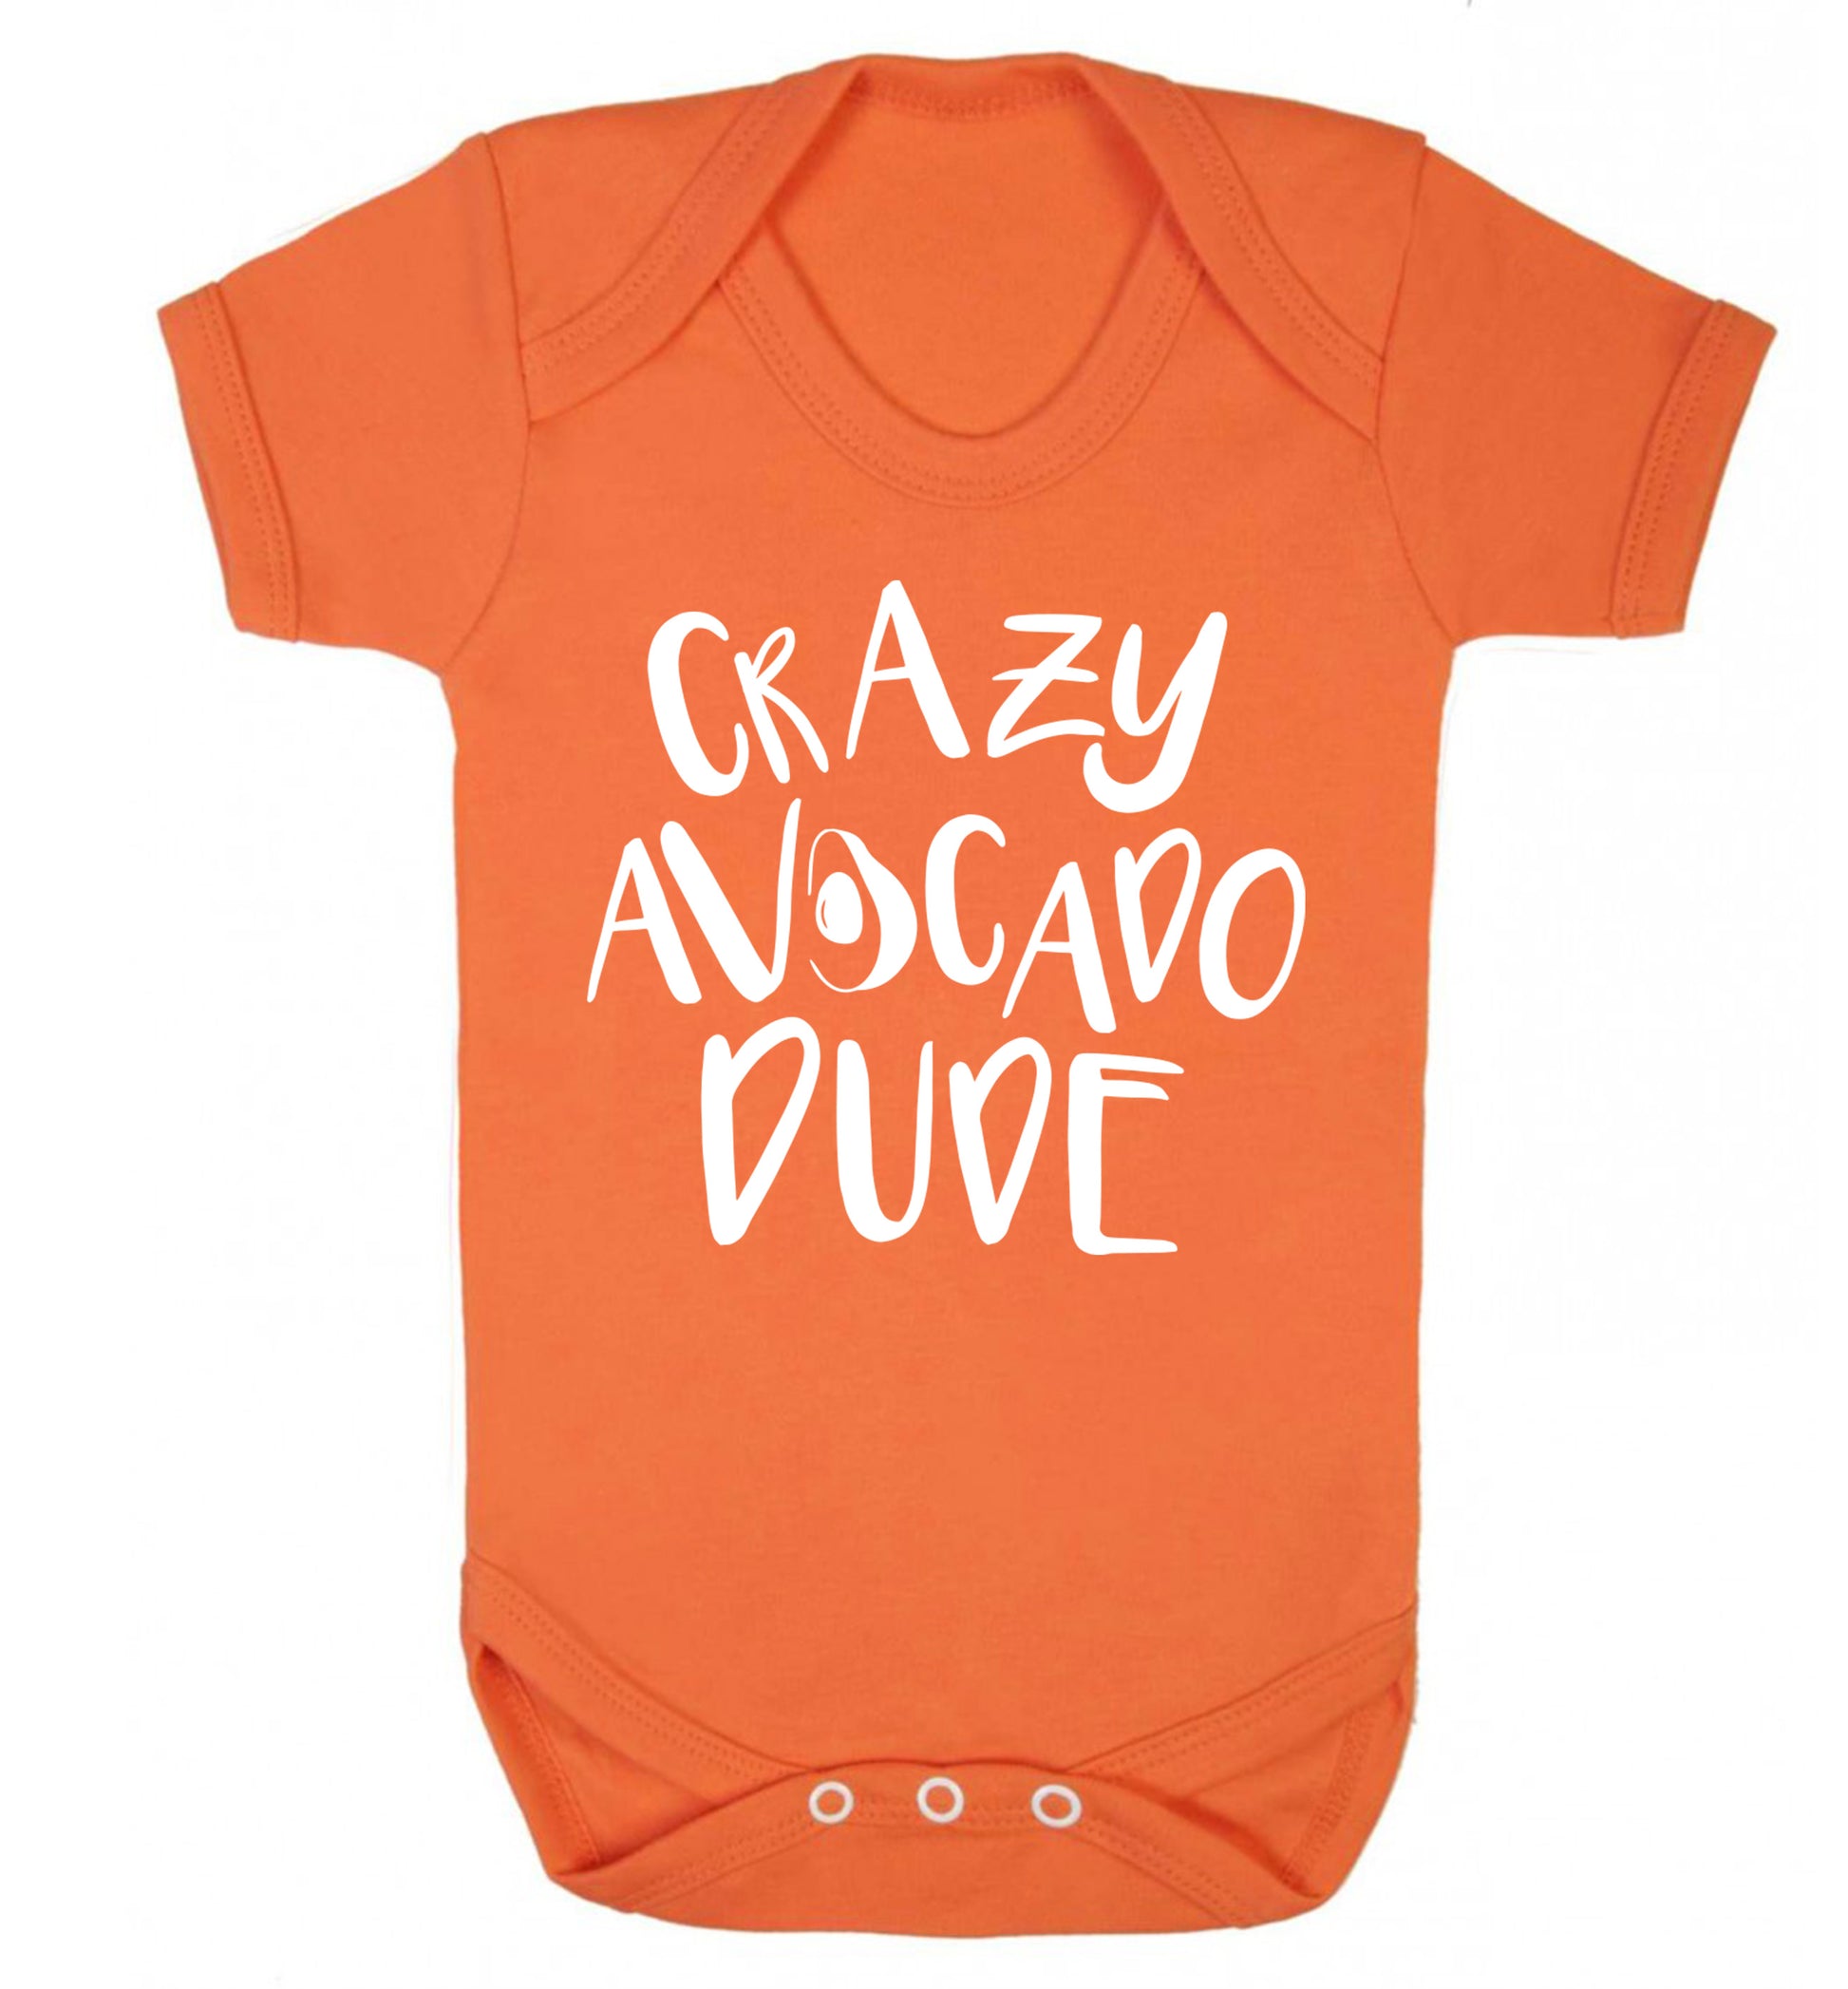 Crazy avocado dude Baby Vest orange 18-24 months